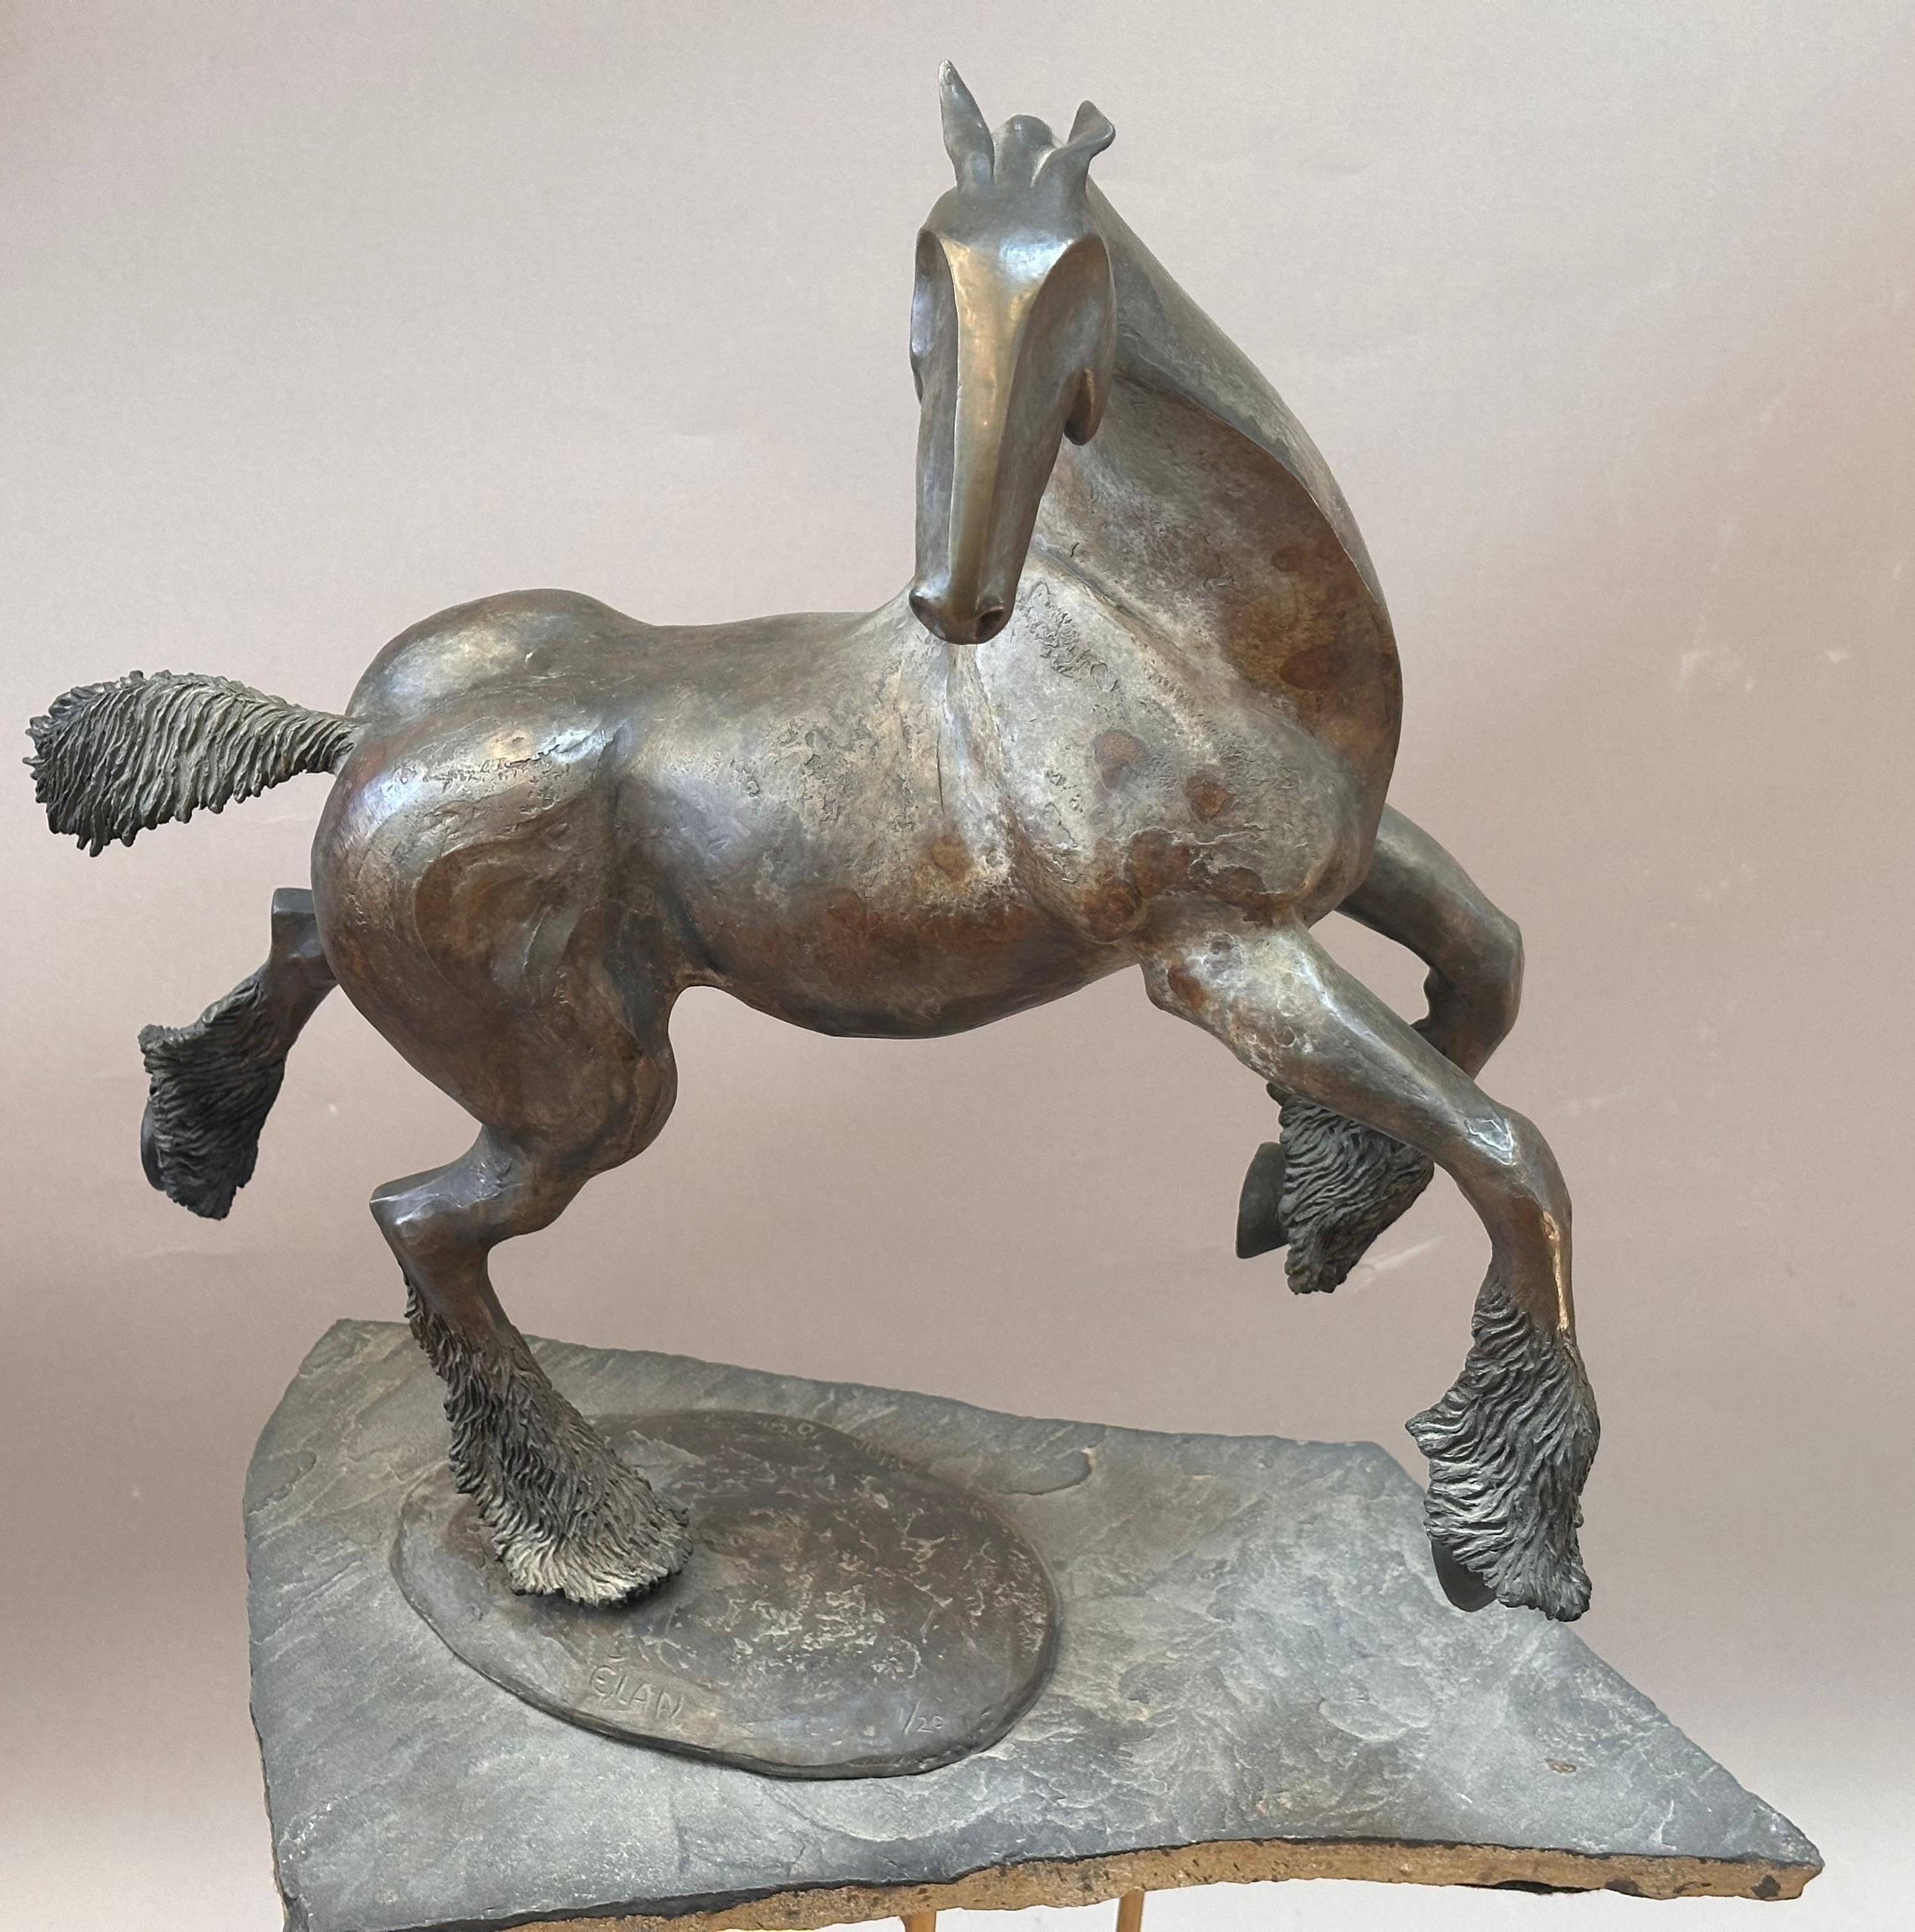 Unique Bronze Horse Sculpture by Tahna cast 1999 Titled “Elan”. Retaining the original patination.